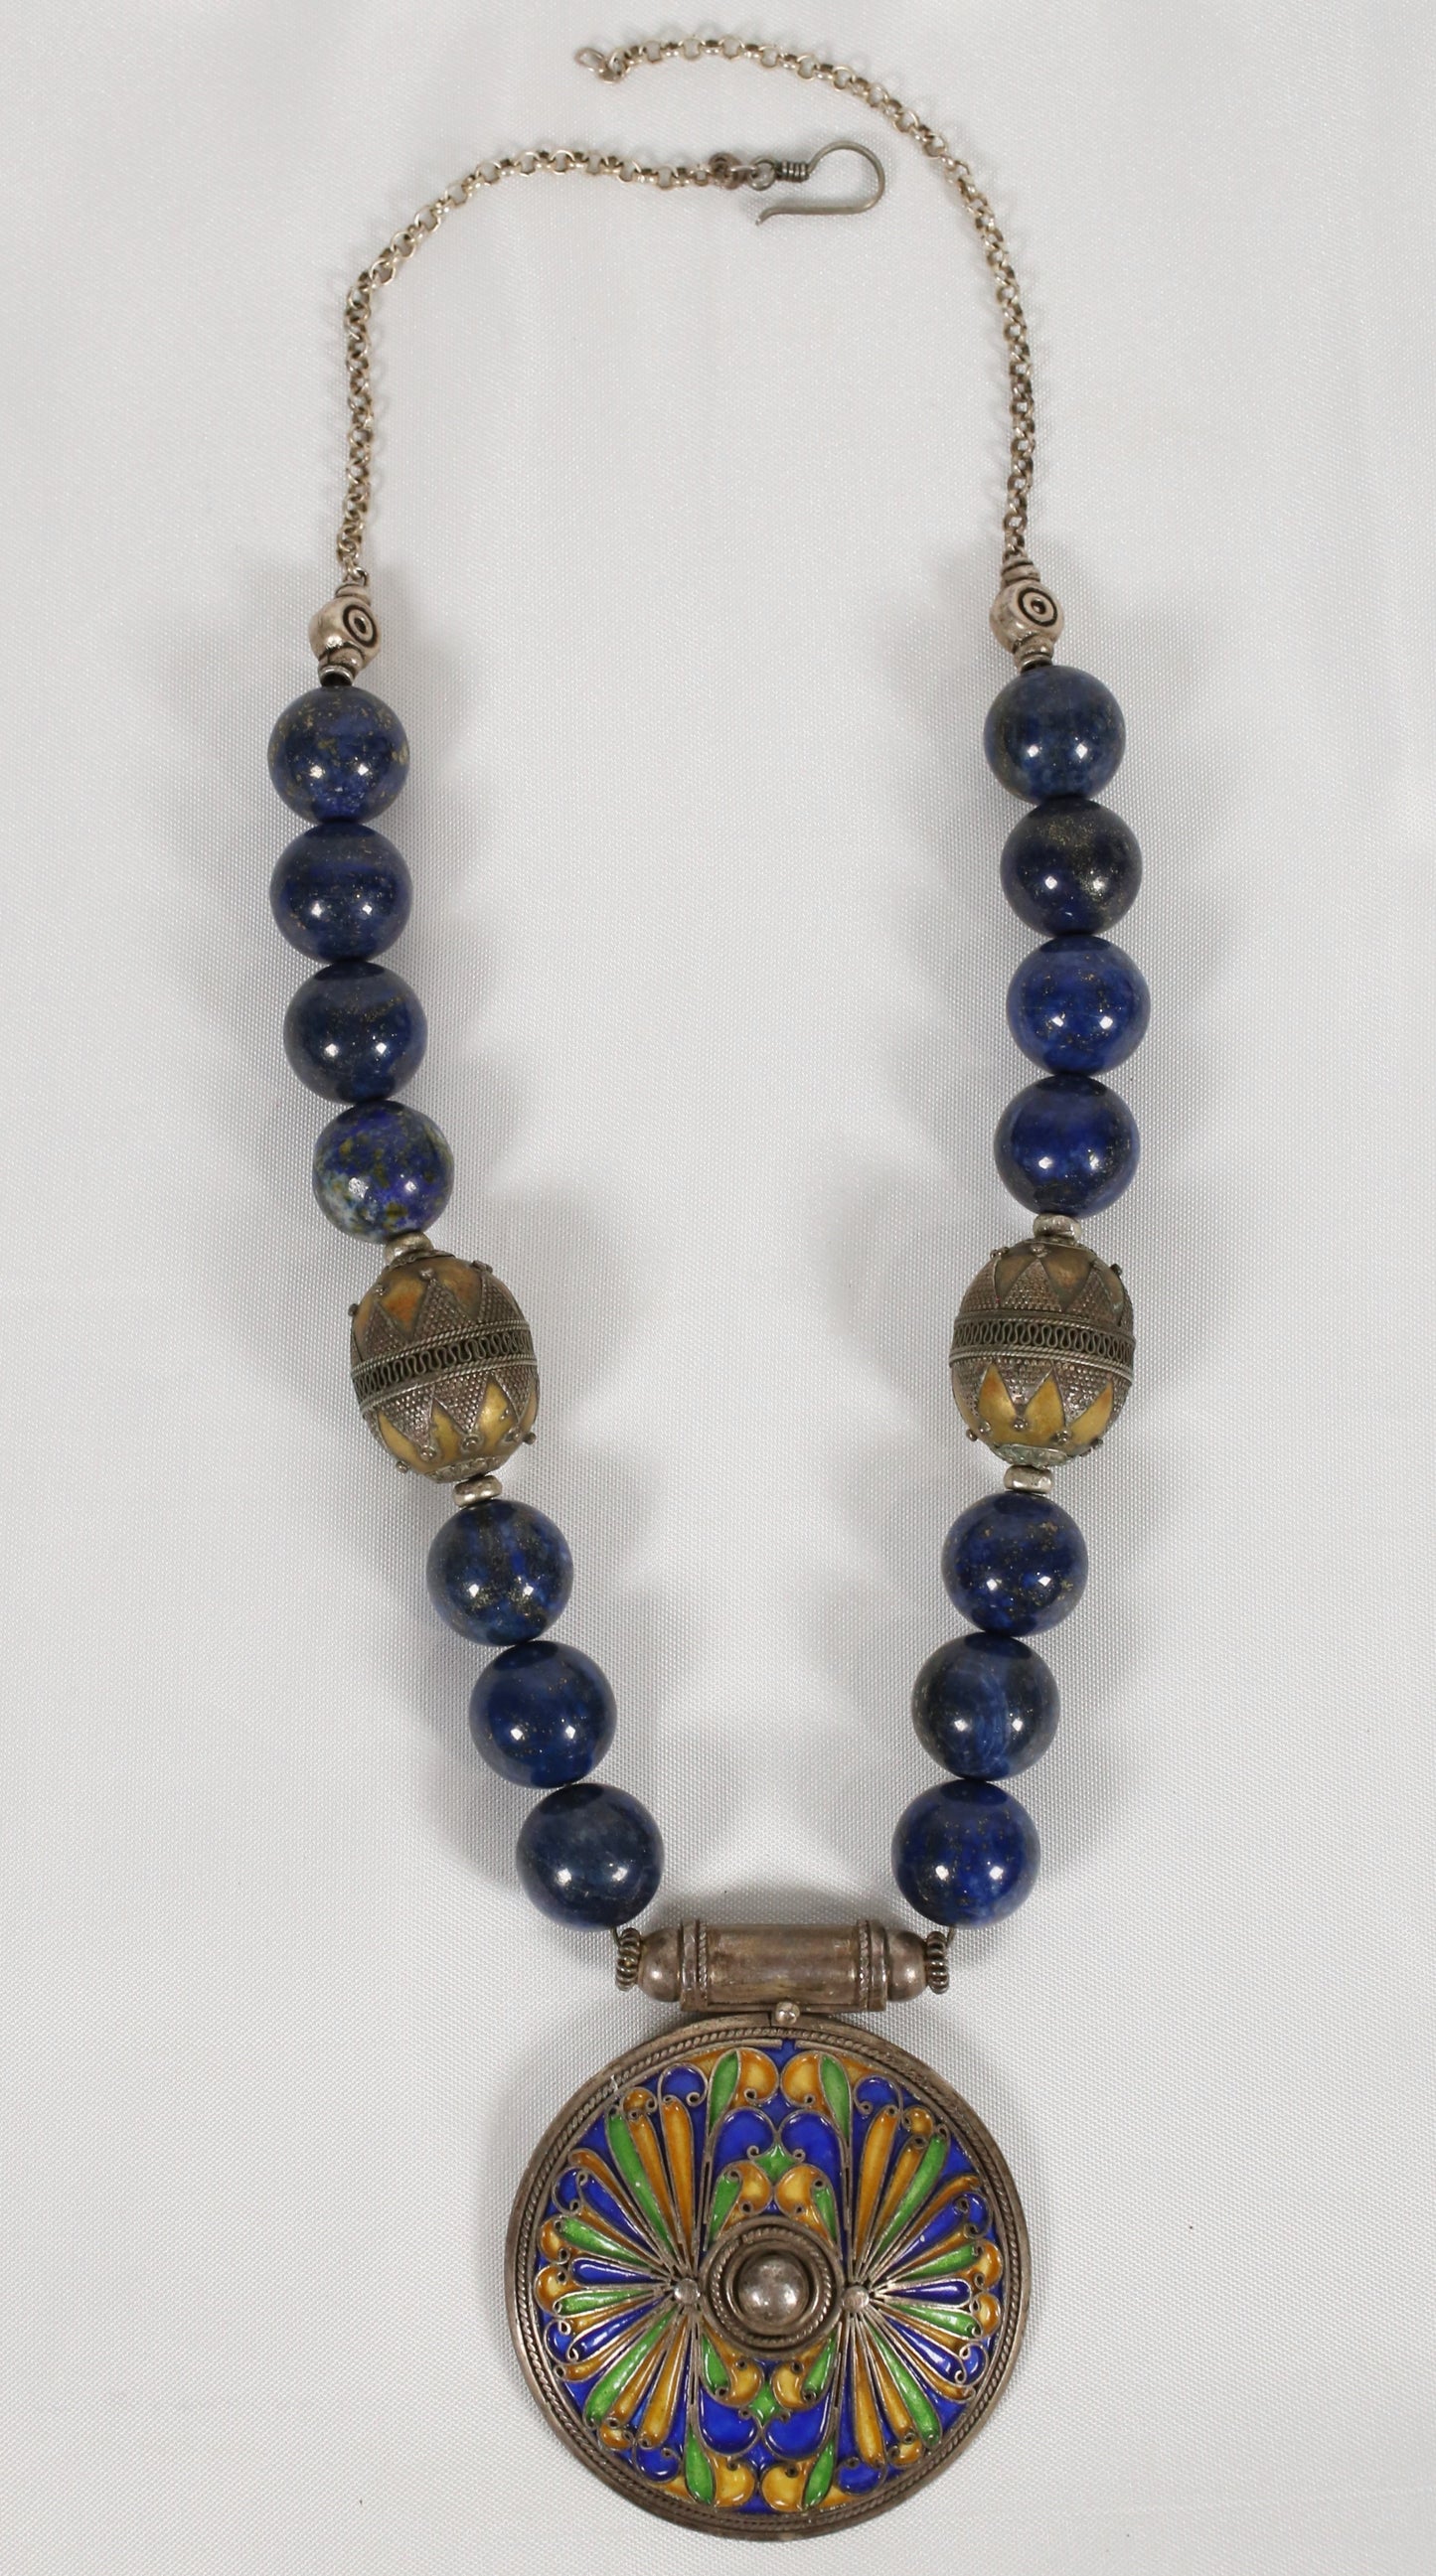 Vintage Sterling Silver Lapis Lazuli Pendant Necklace, 23 inches (adjustable) - 150.2g